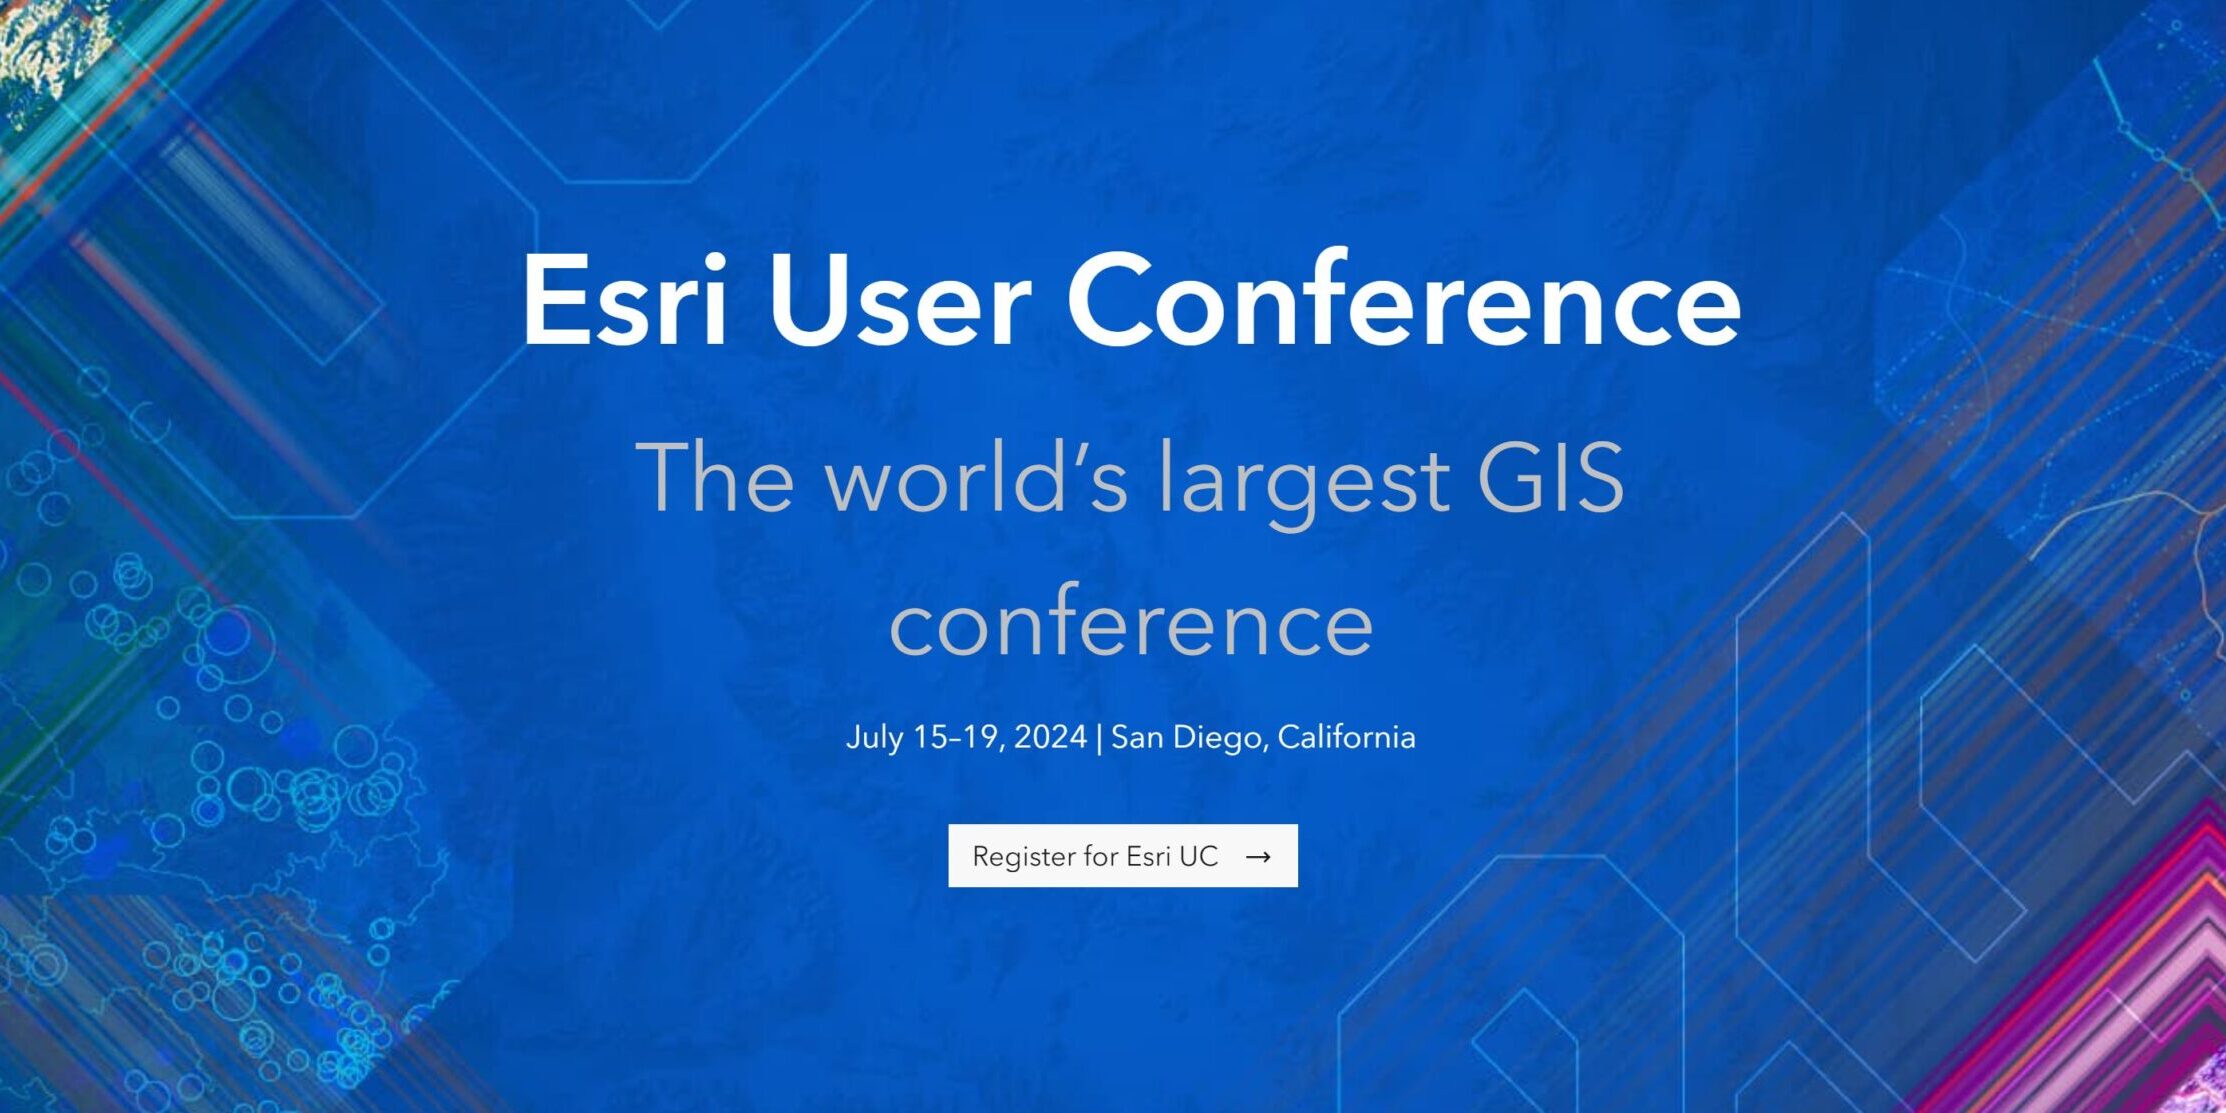 ESRI User Conference 2024 PLW Modelworks